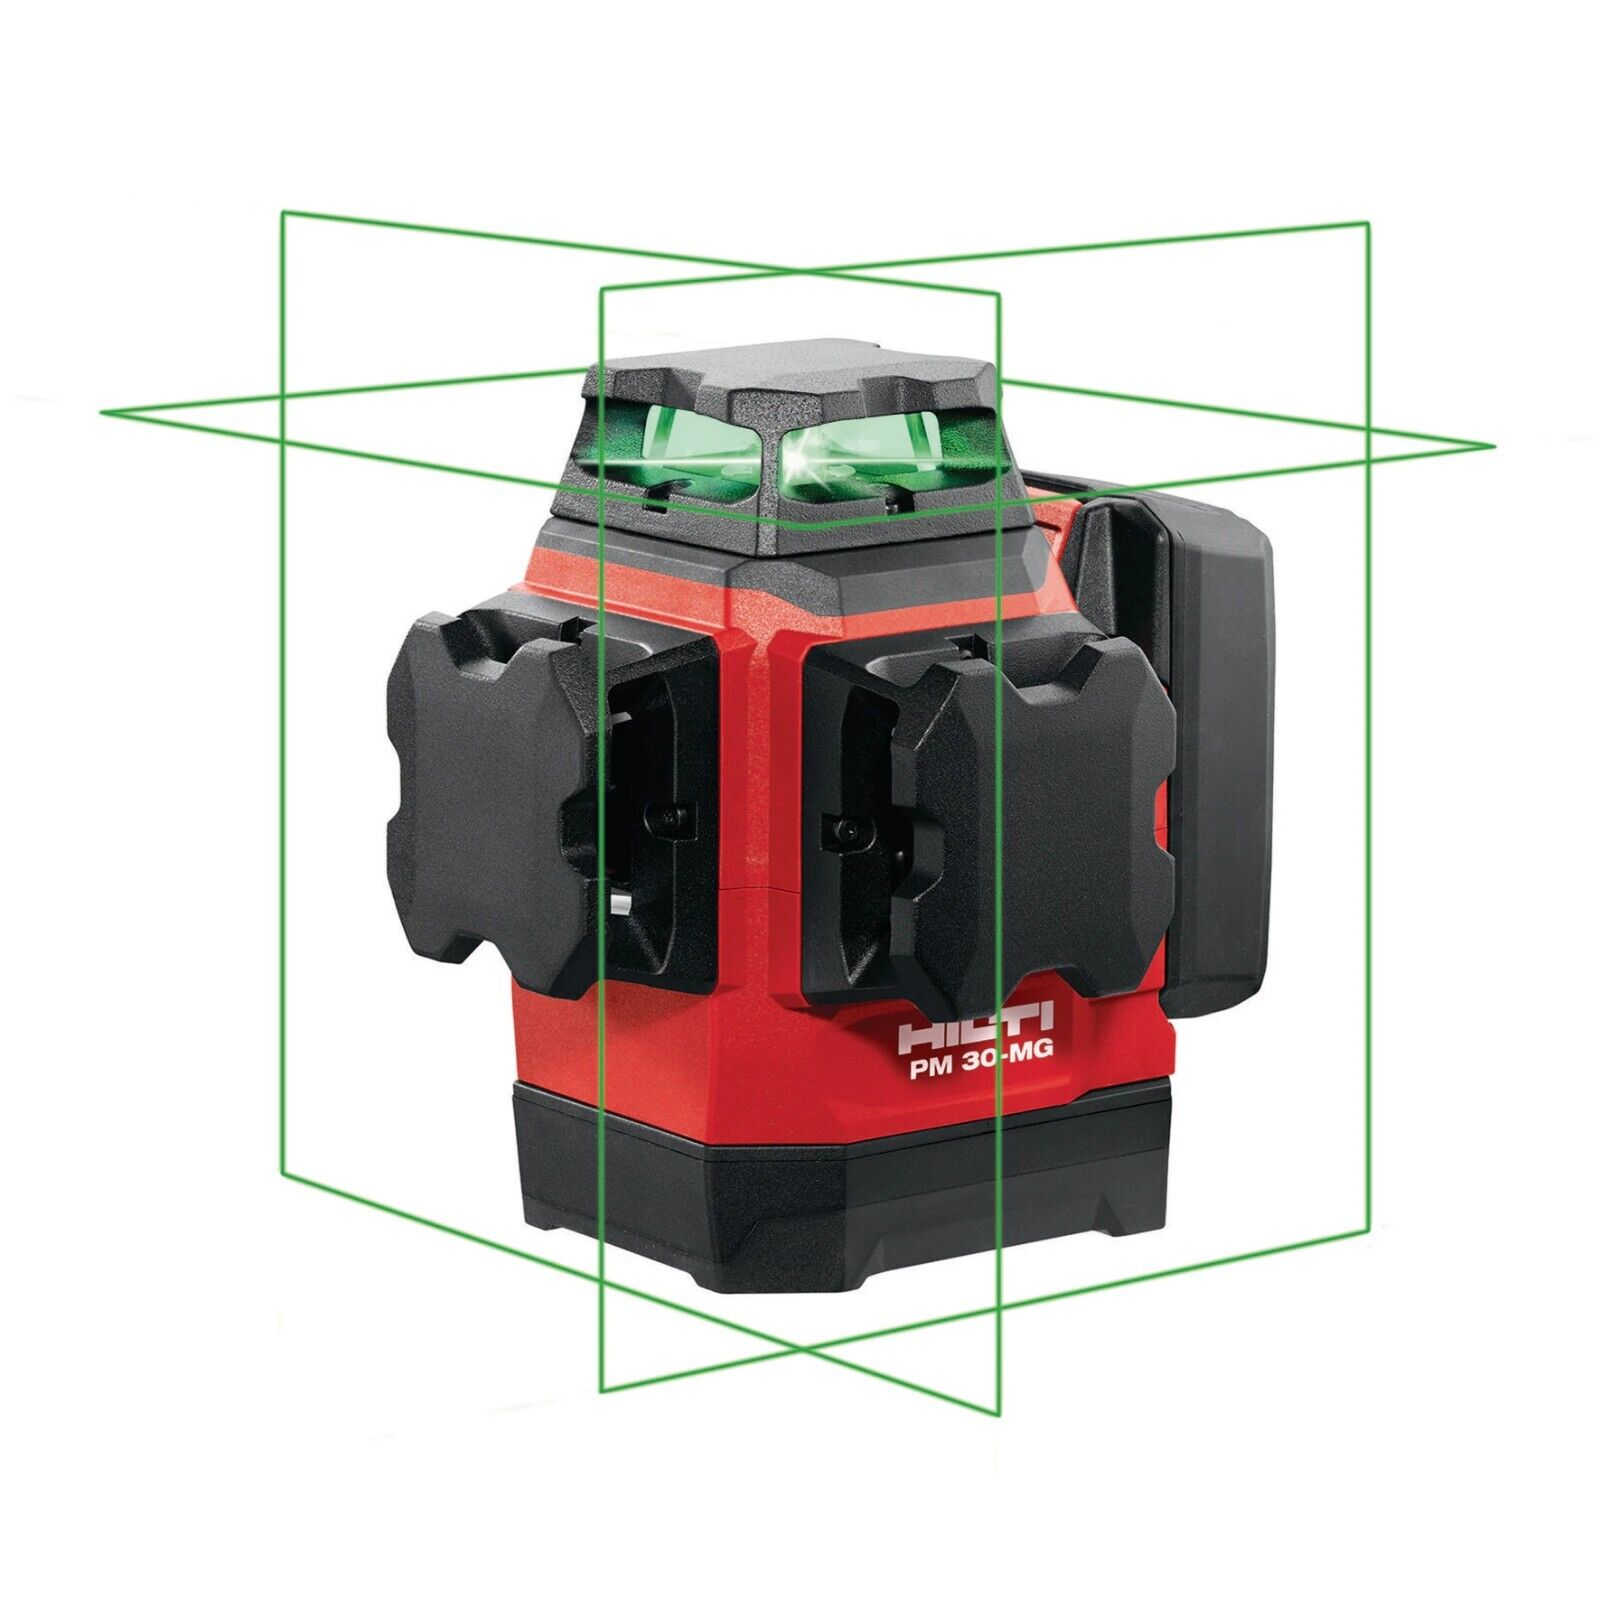 Hilti Model PM 30-MG Multi-Line Green Beam Laser Level Crosshair (Tool Only)